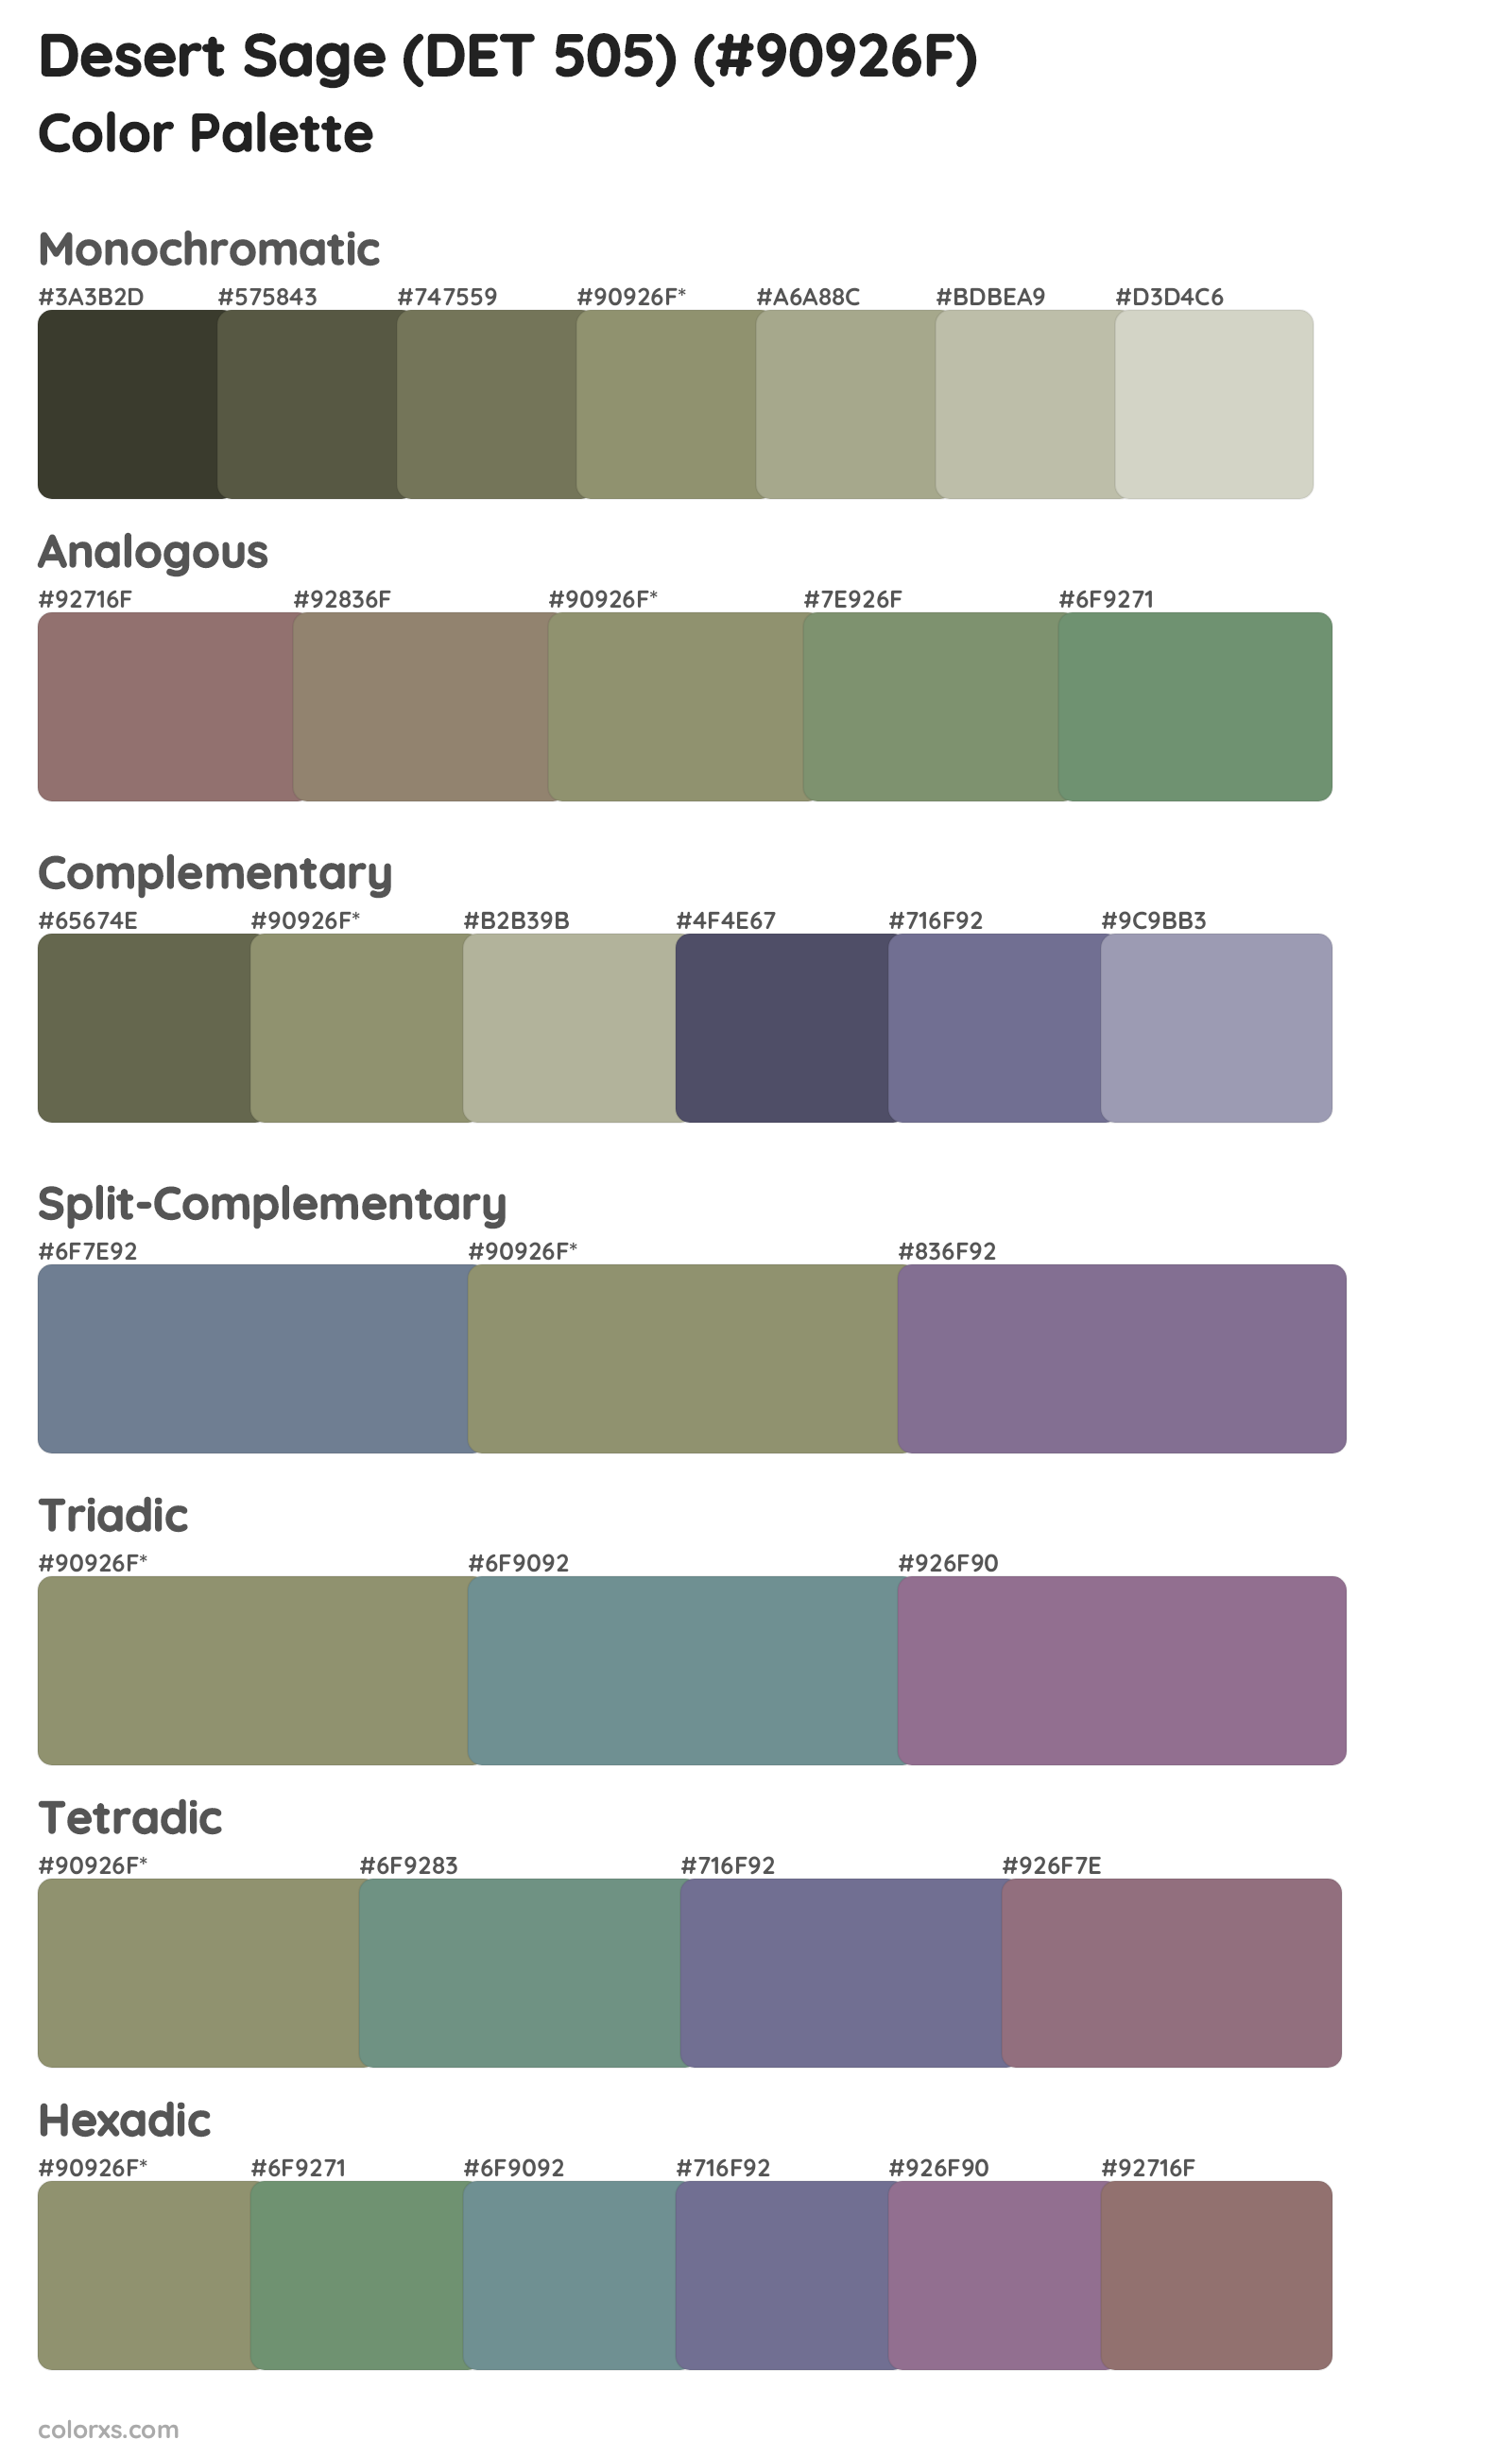 Desert Sage (DET 505) Color Scheme Palettes